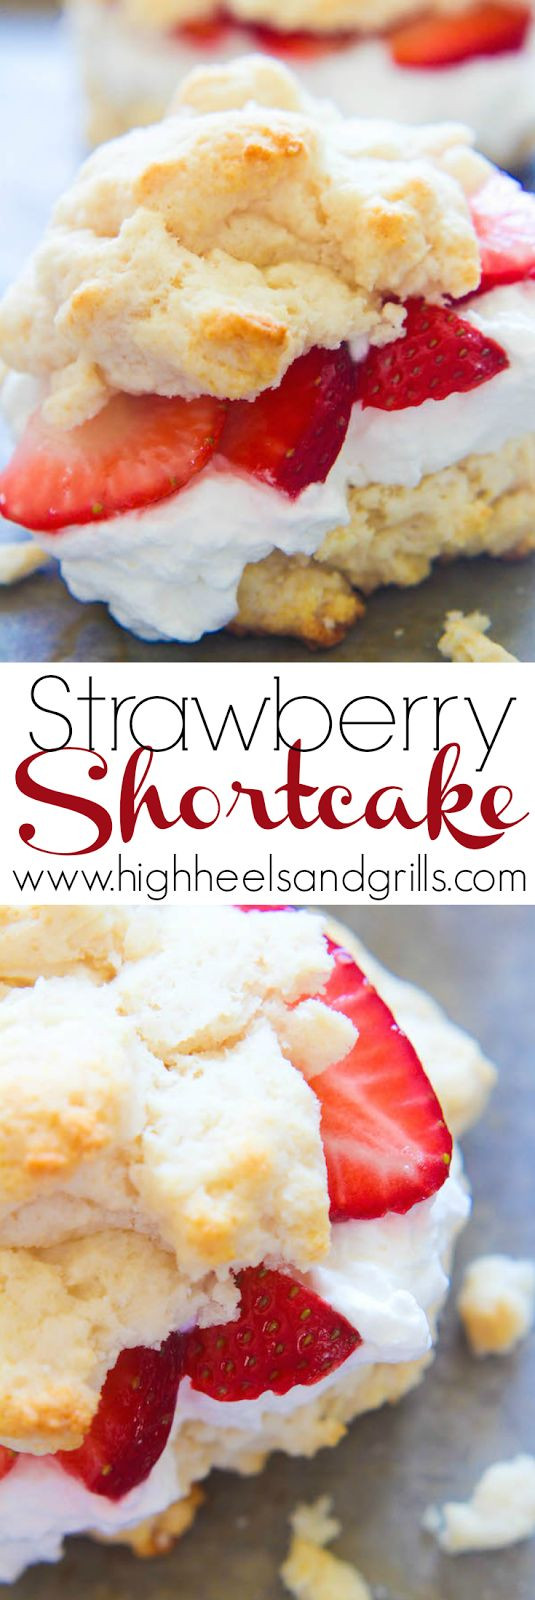 Strawberry Shortcake Bisquick
 Homemade Cream and Bisquick on Pinterest